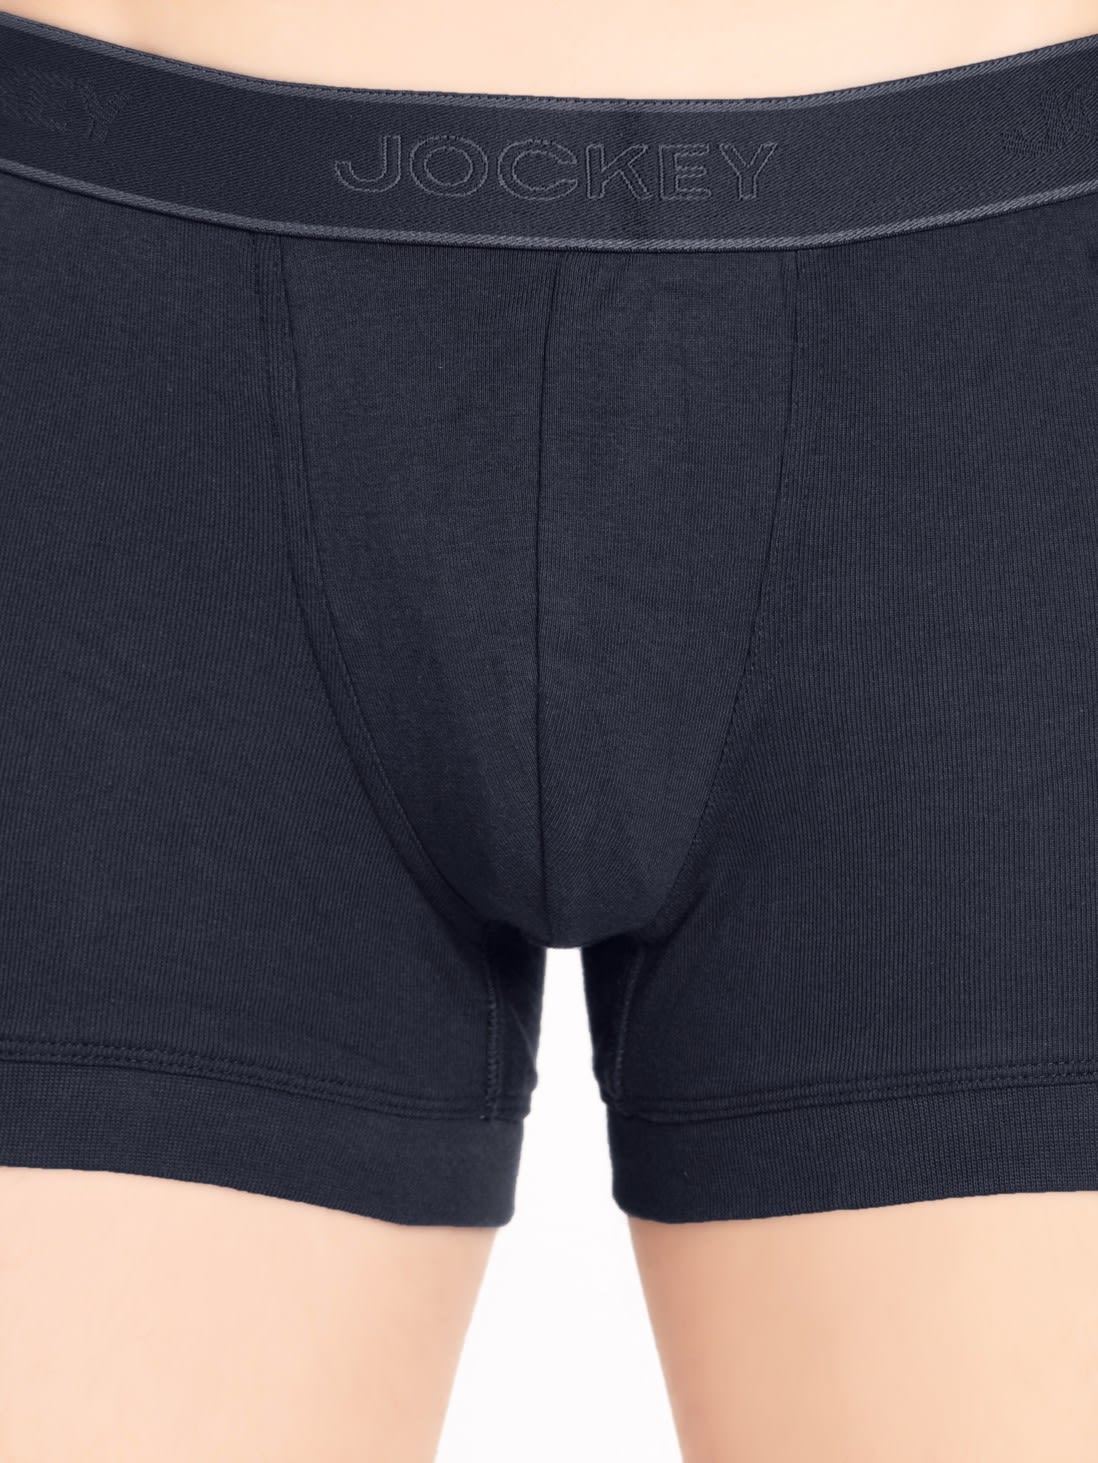 Jockey Men Innerwear | Men's Super Combed Cotton Rib Solid Trunk with ...